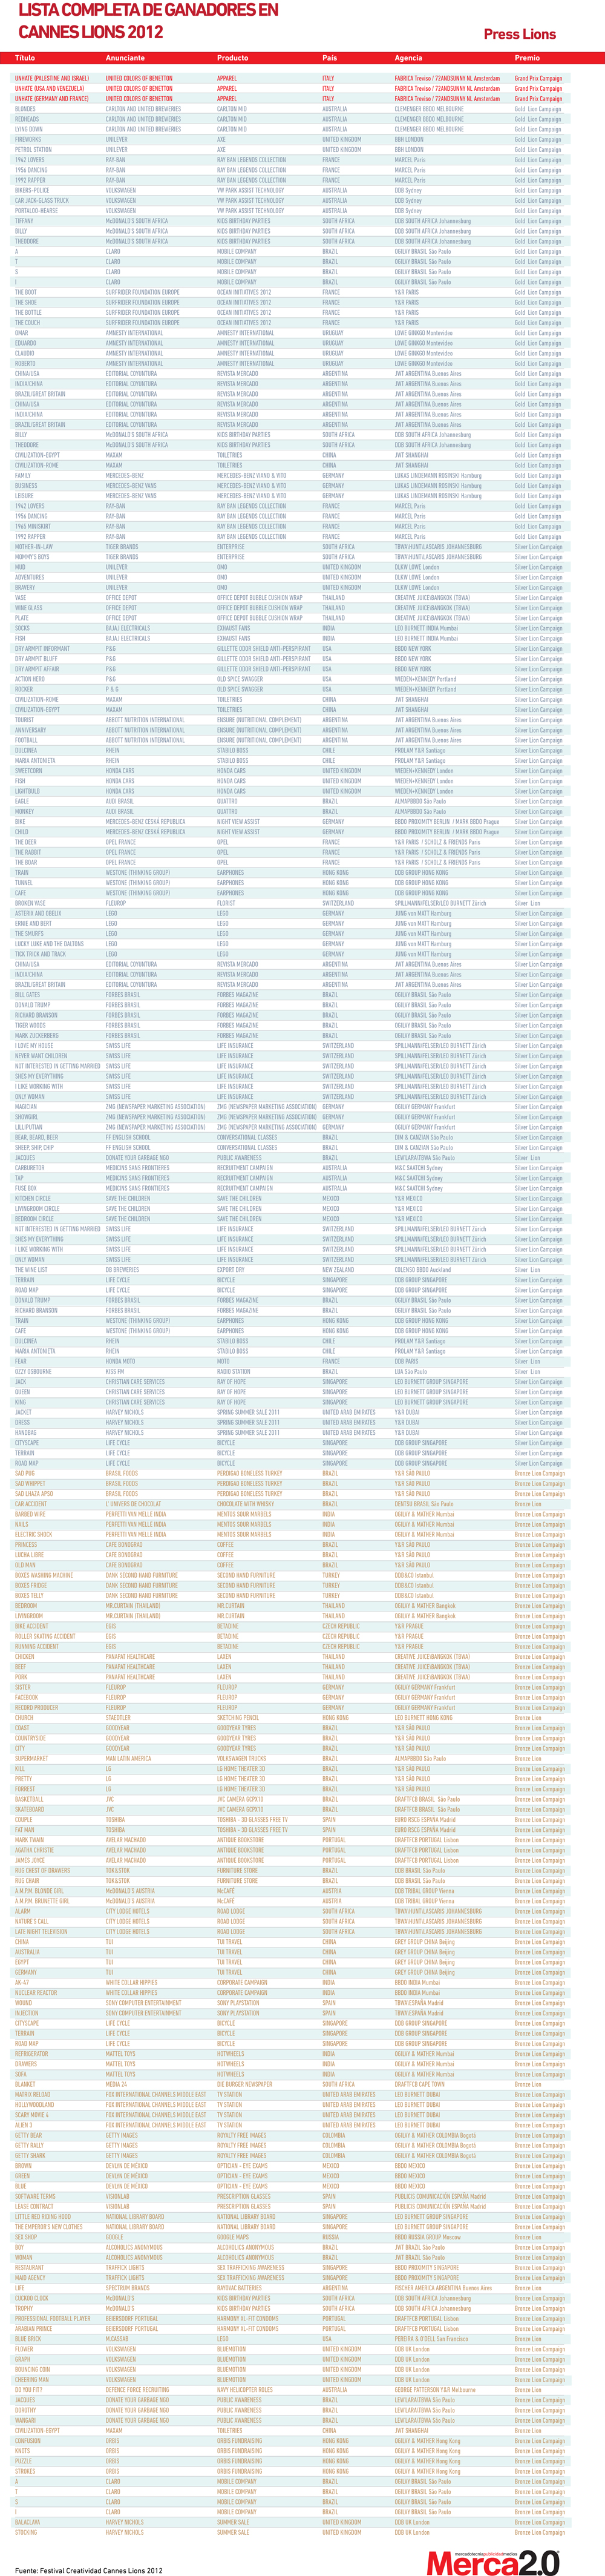 Lista completa de ganadores Cannes Press Lions 2012